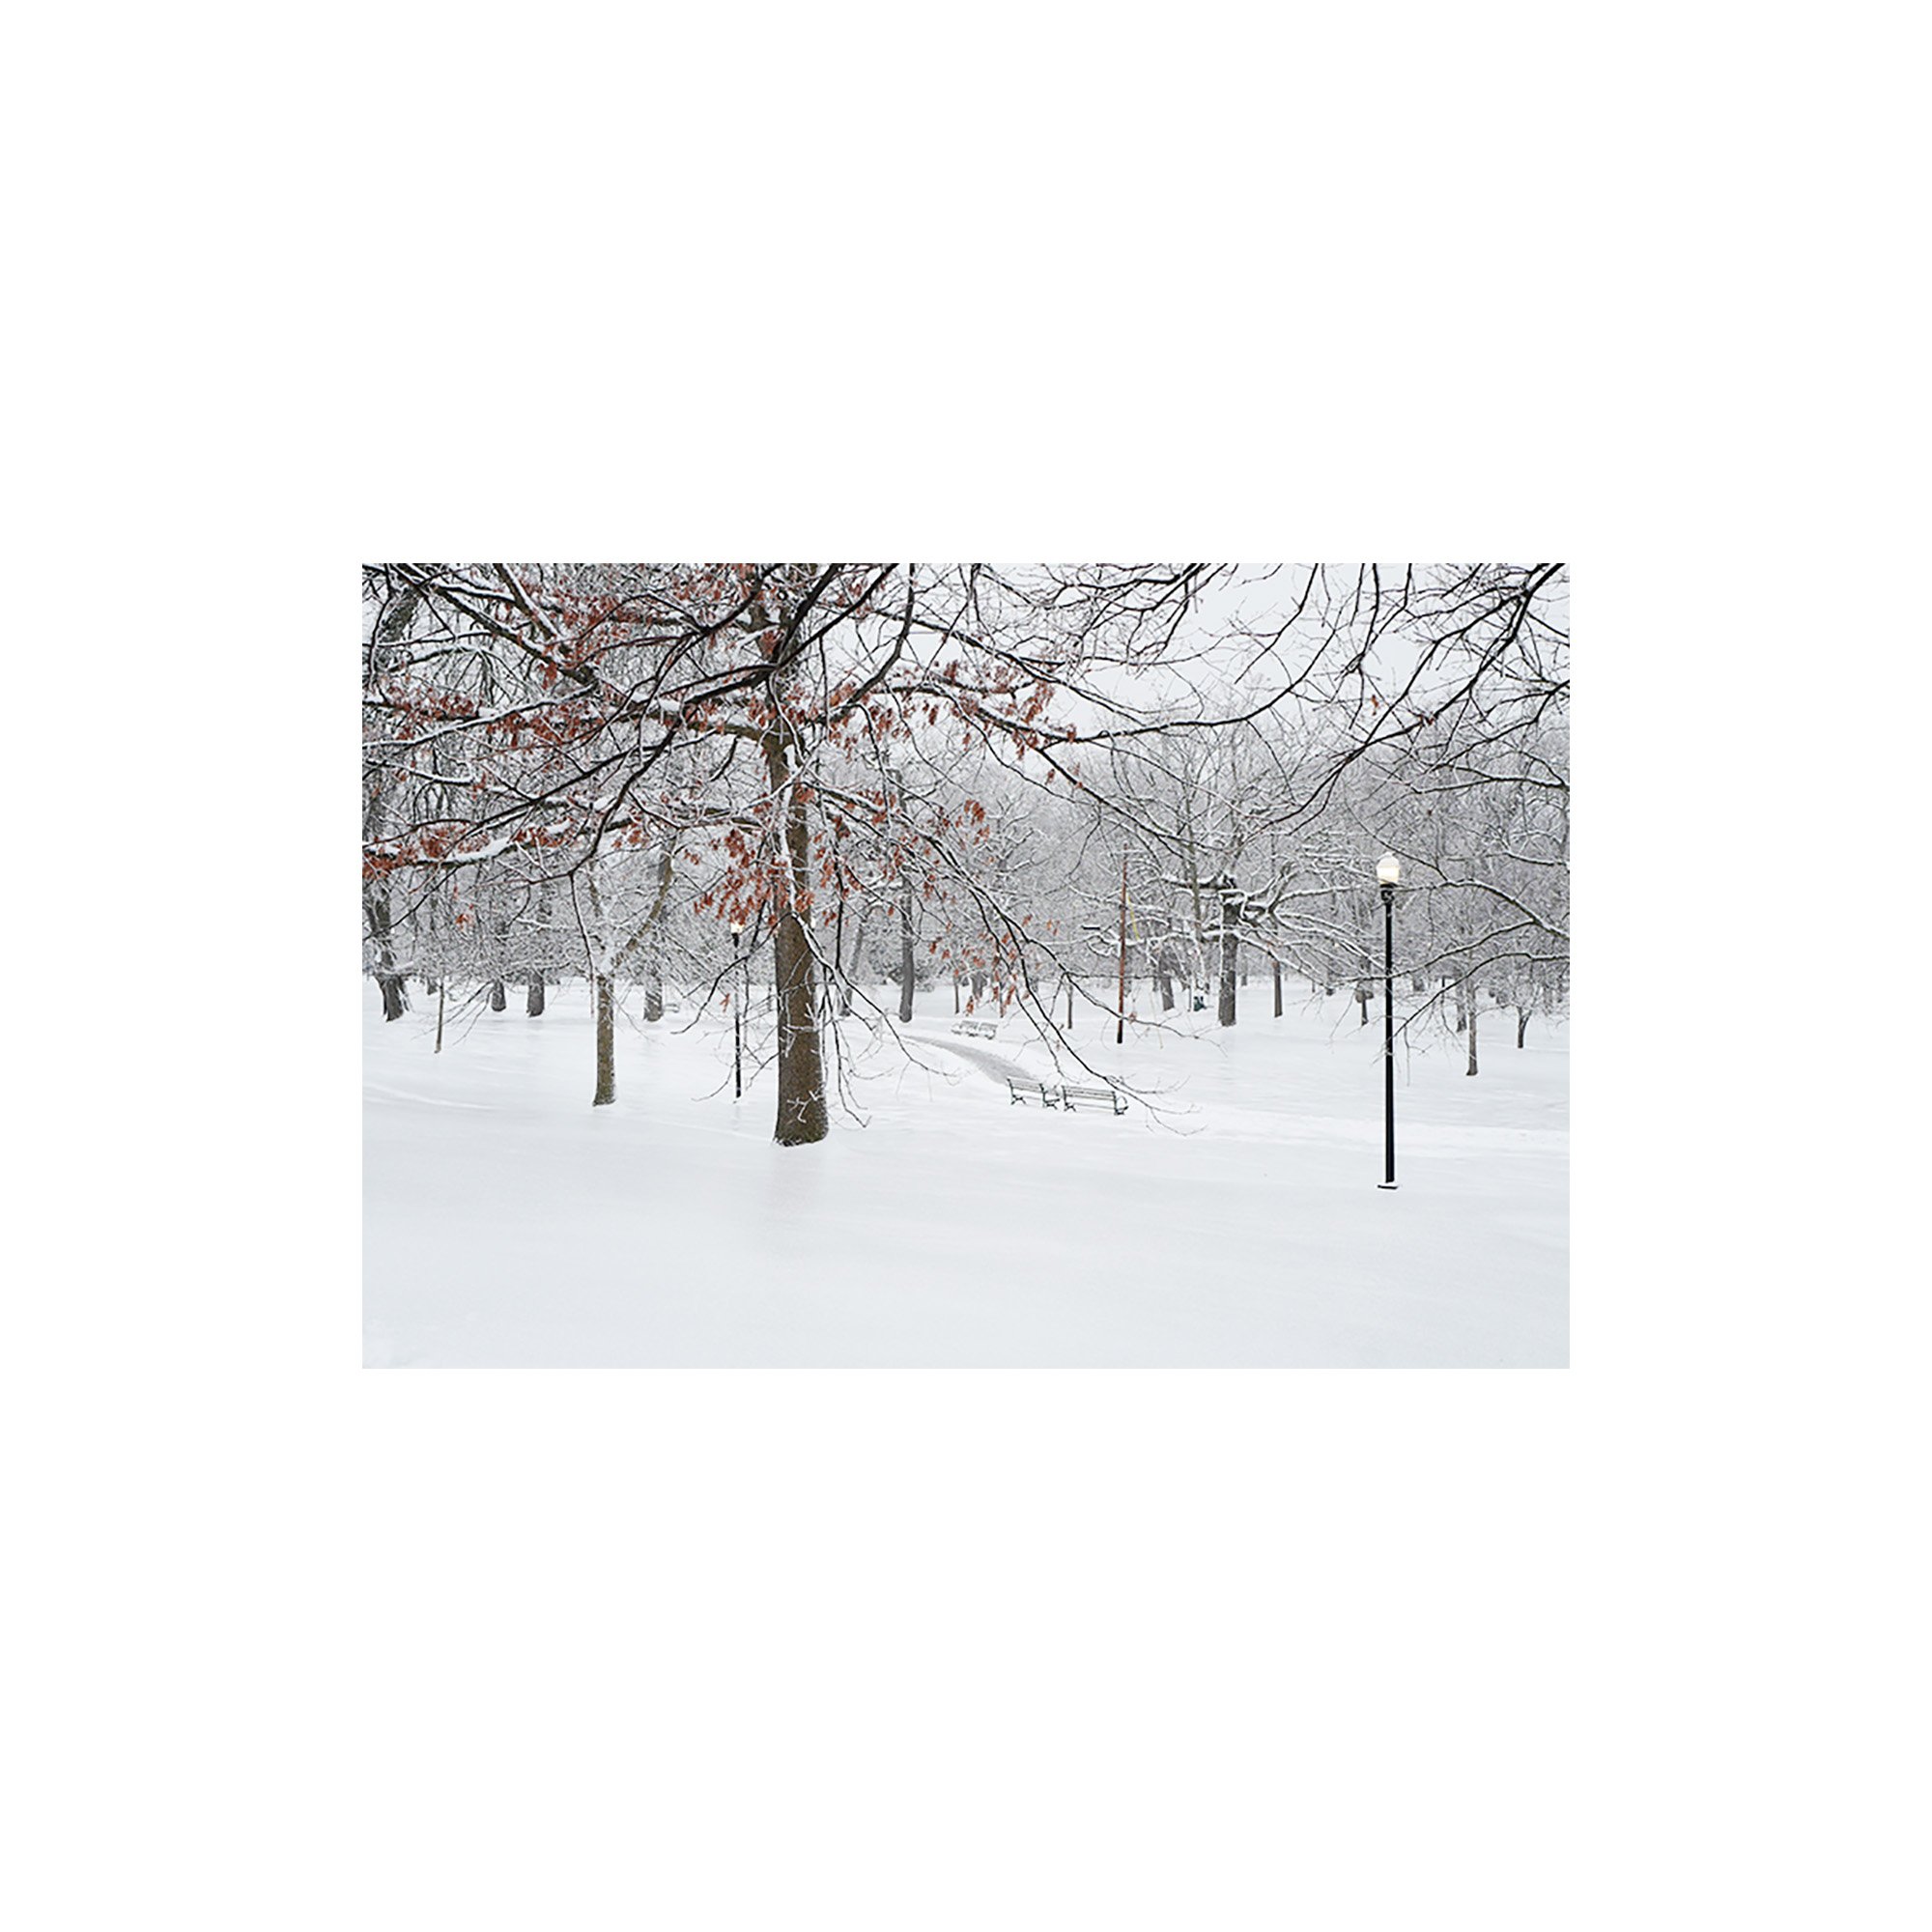 Untitled-1 - Fall_Winter - Brightness 100 - 6 copy.jpg